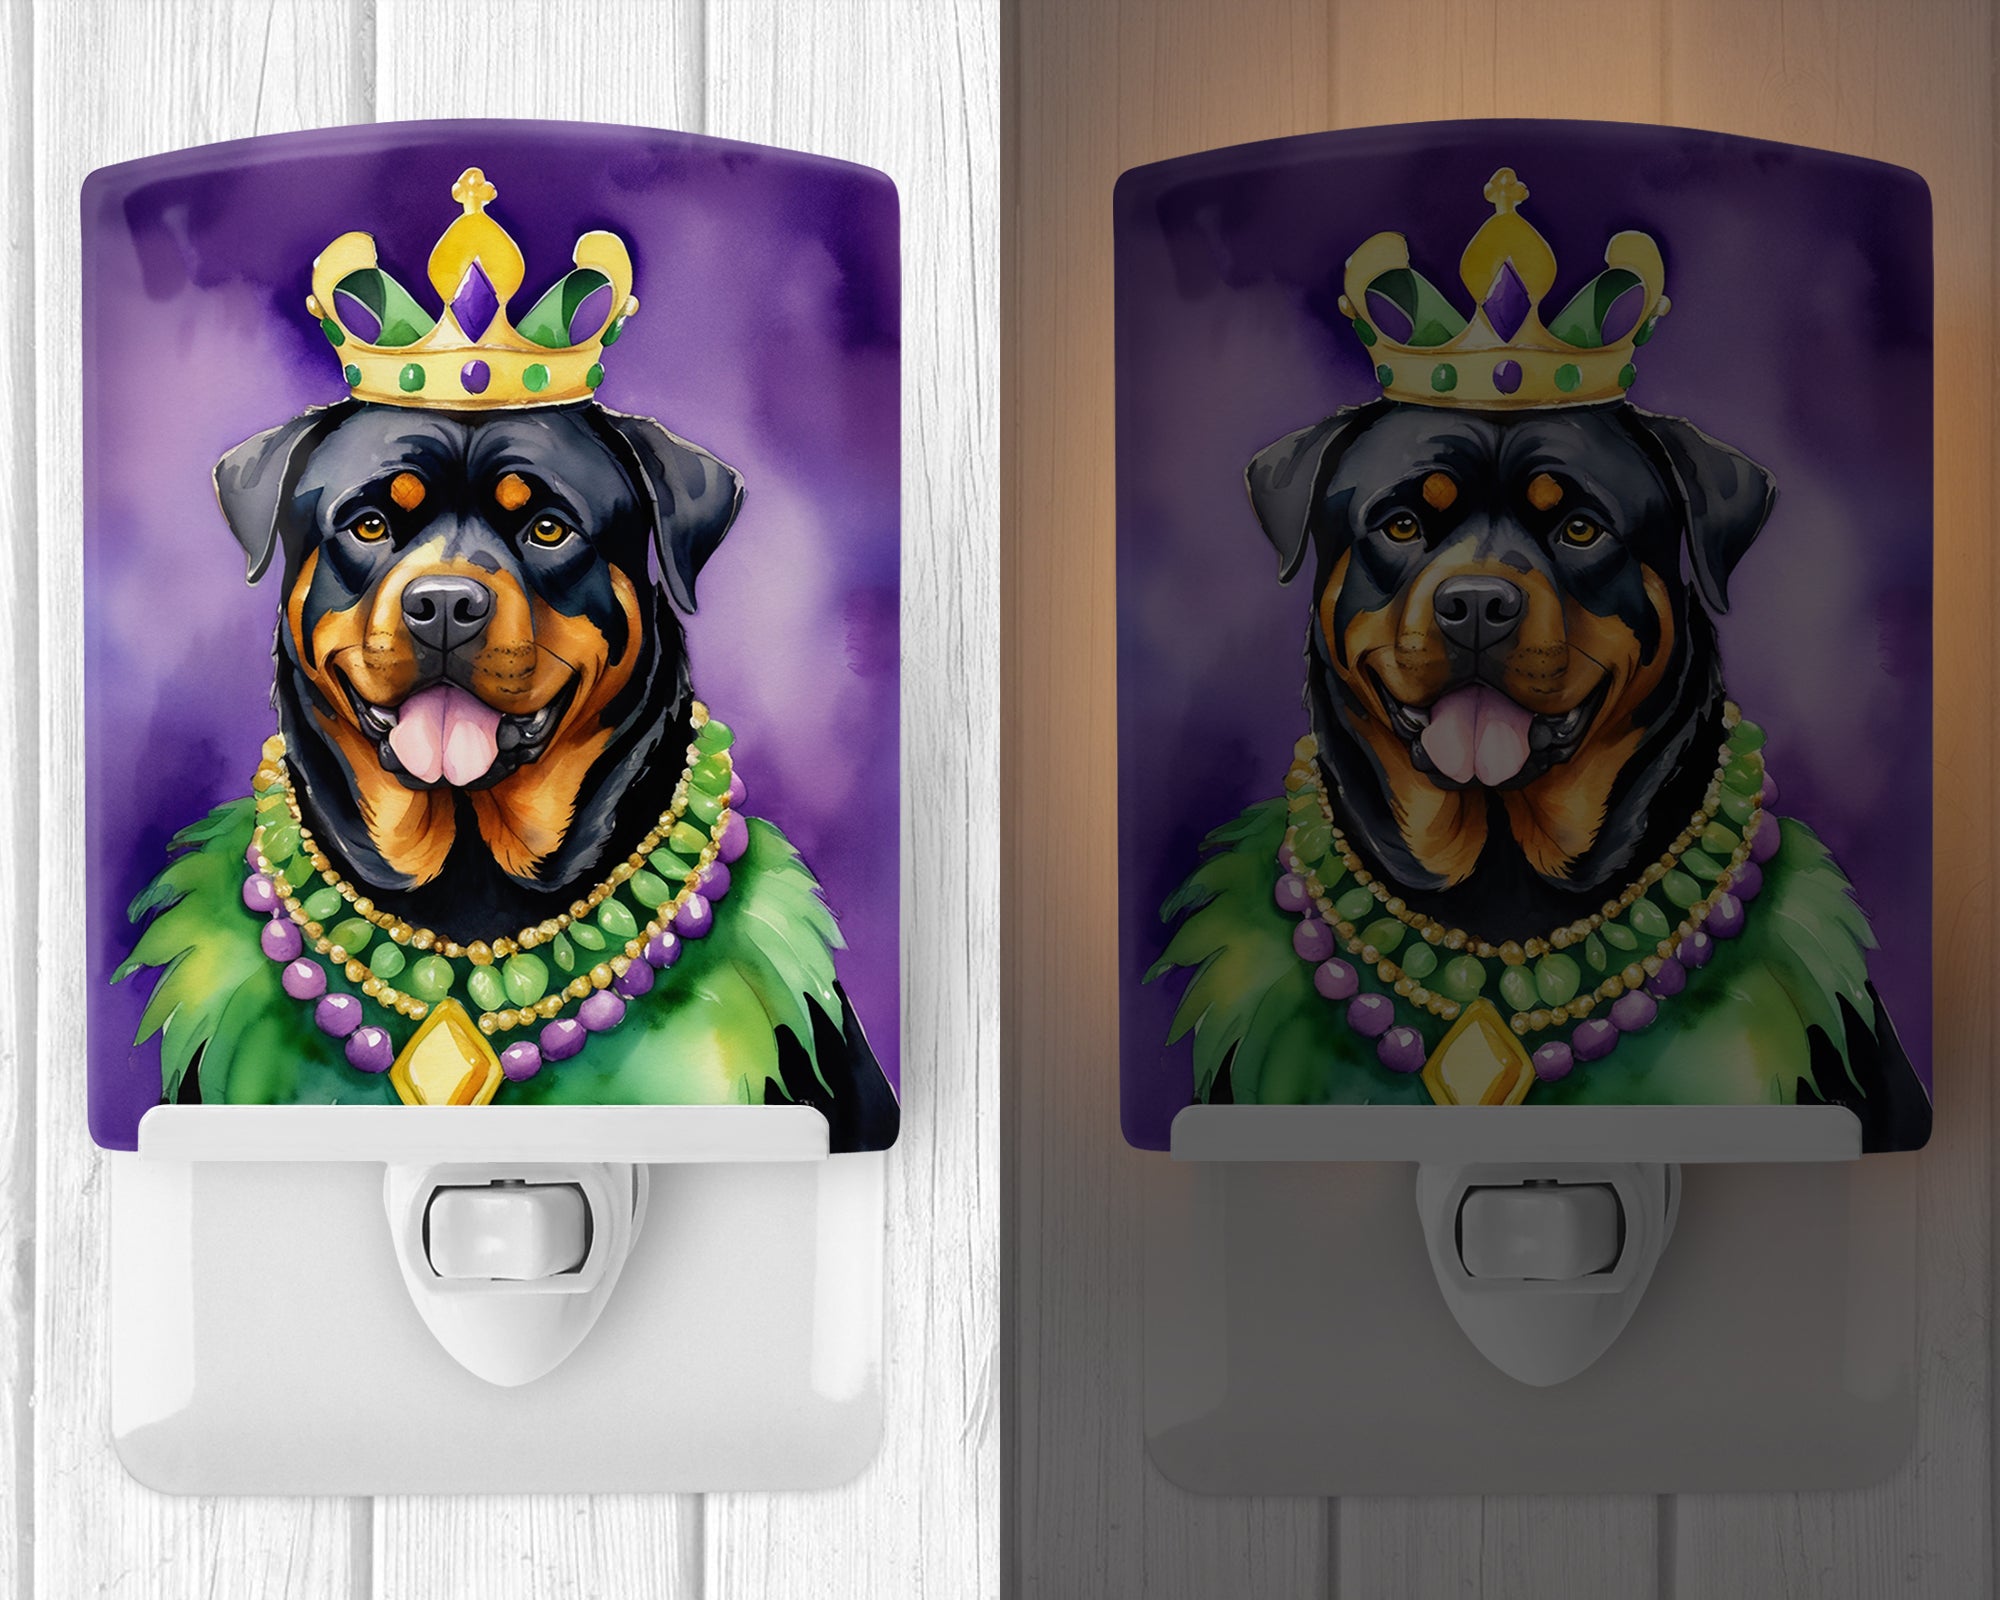 Buy this Rottweiler King of Mardi Gras Ceramic Night Light